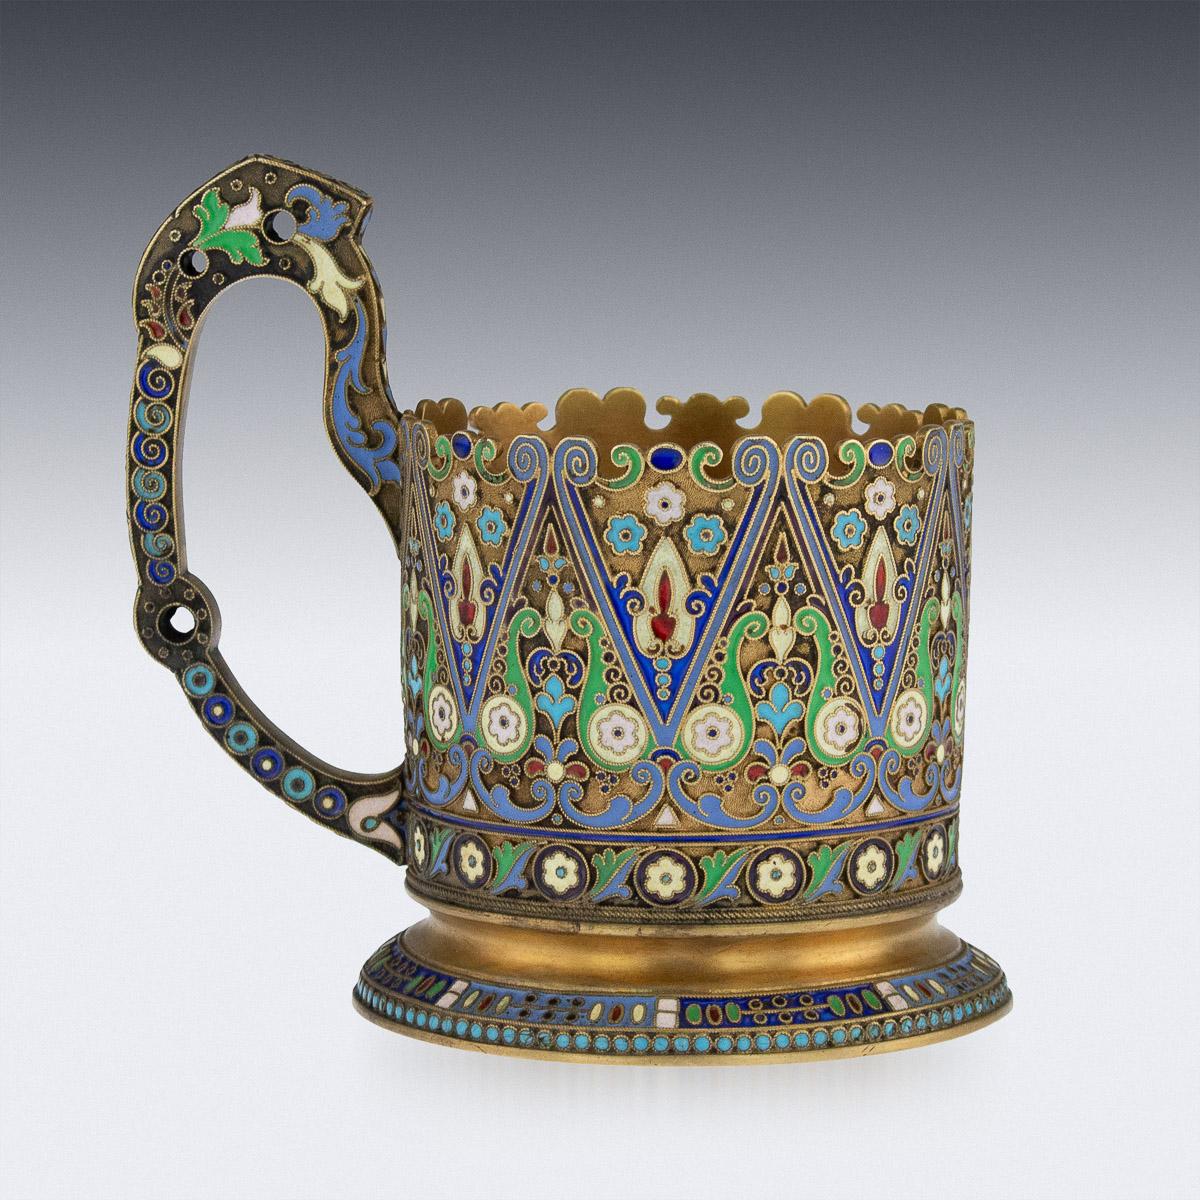 Cloissoné 20th Century Imperial Russian Silver-Gilt Enamel Tea Glass Holder, circa 1910